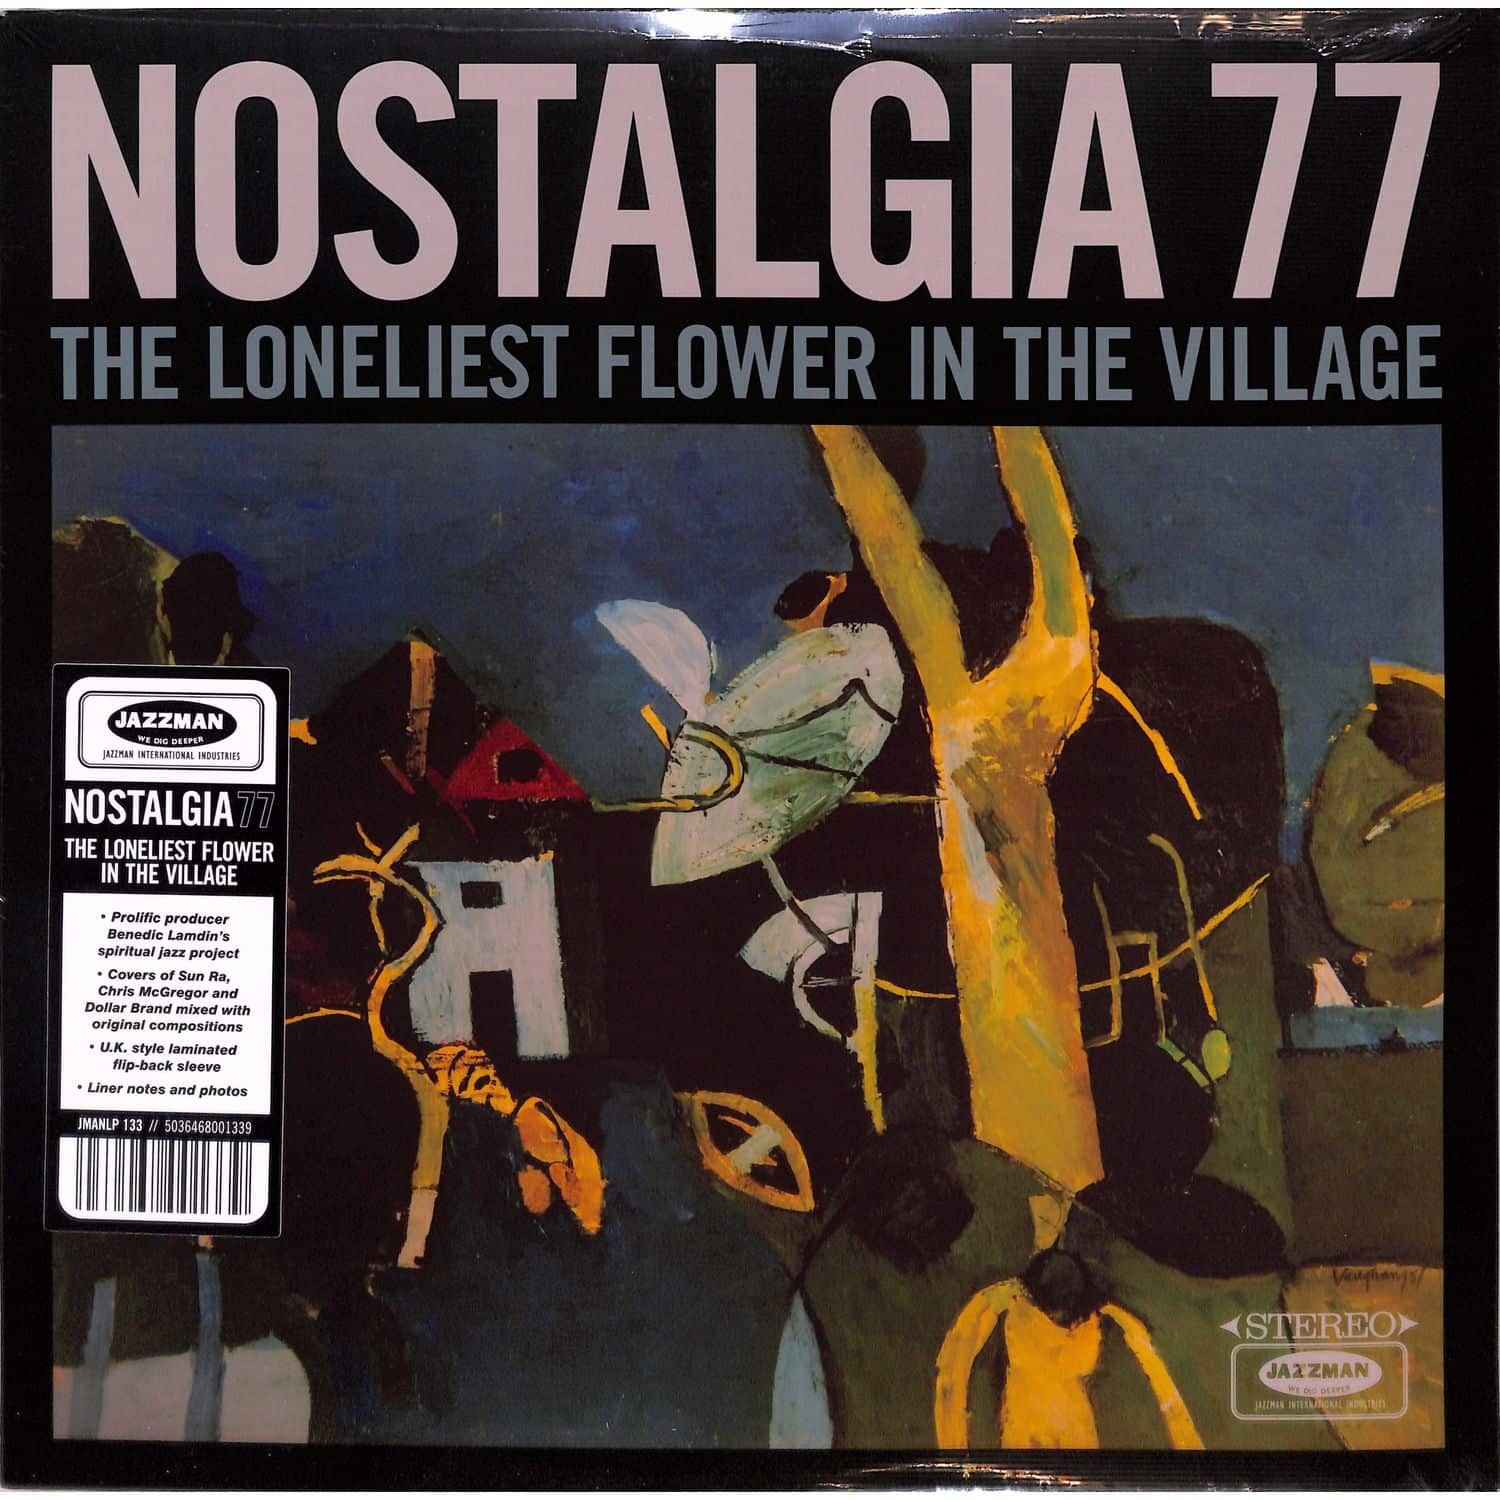 Nostalgia 77 - THE LONELIEST FLOWER IN THE VILLAGE 